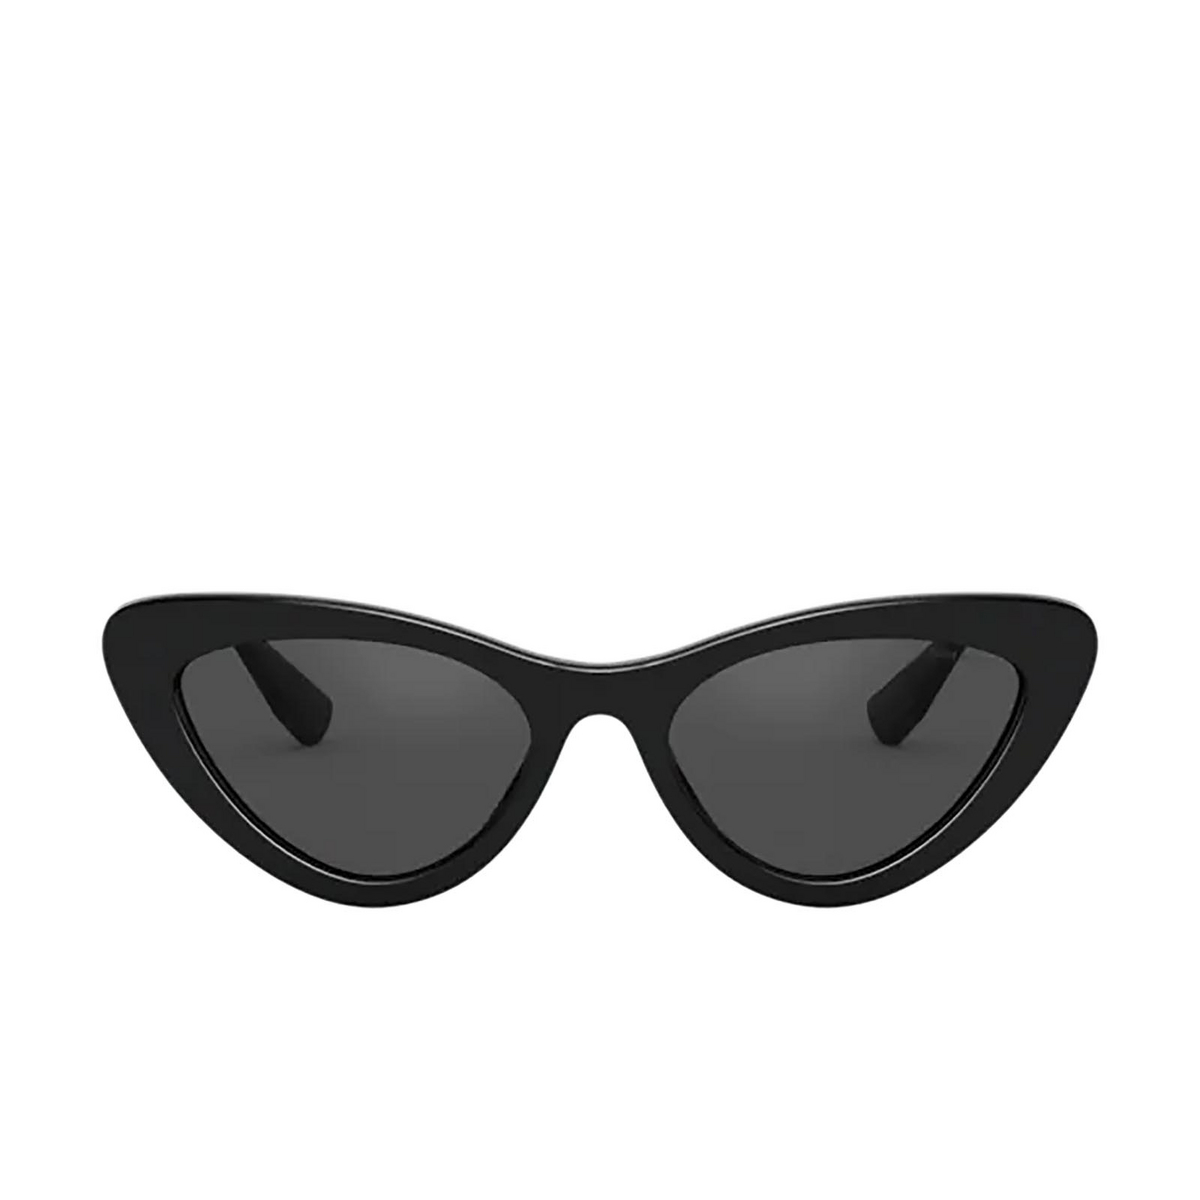 Miu Miu® Cat-eye Sunglasses: MU 01VS color Black 1AB5S0 - front view.